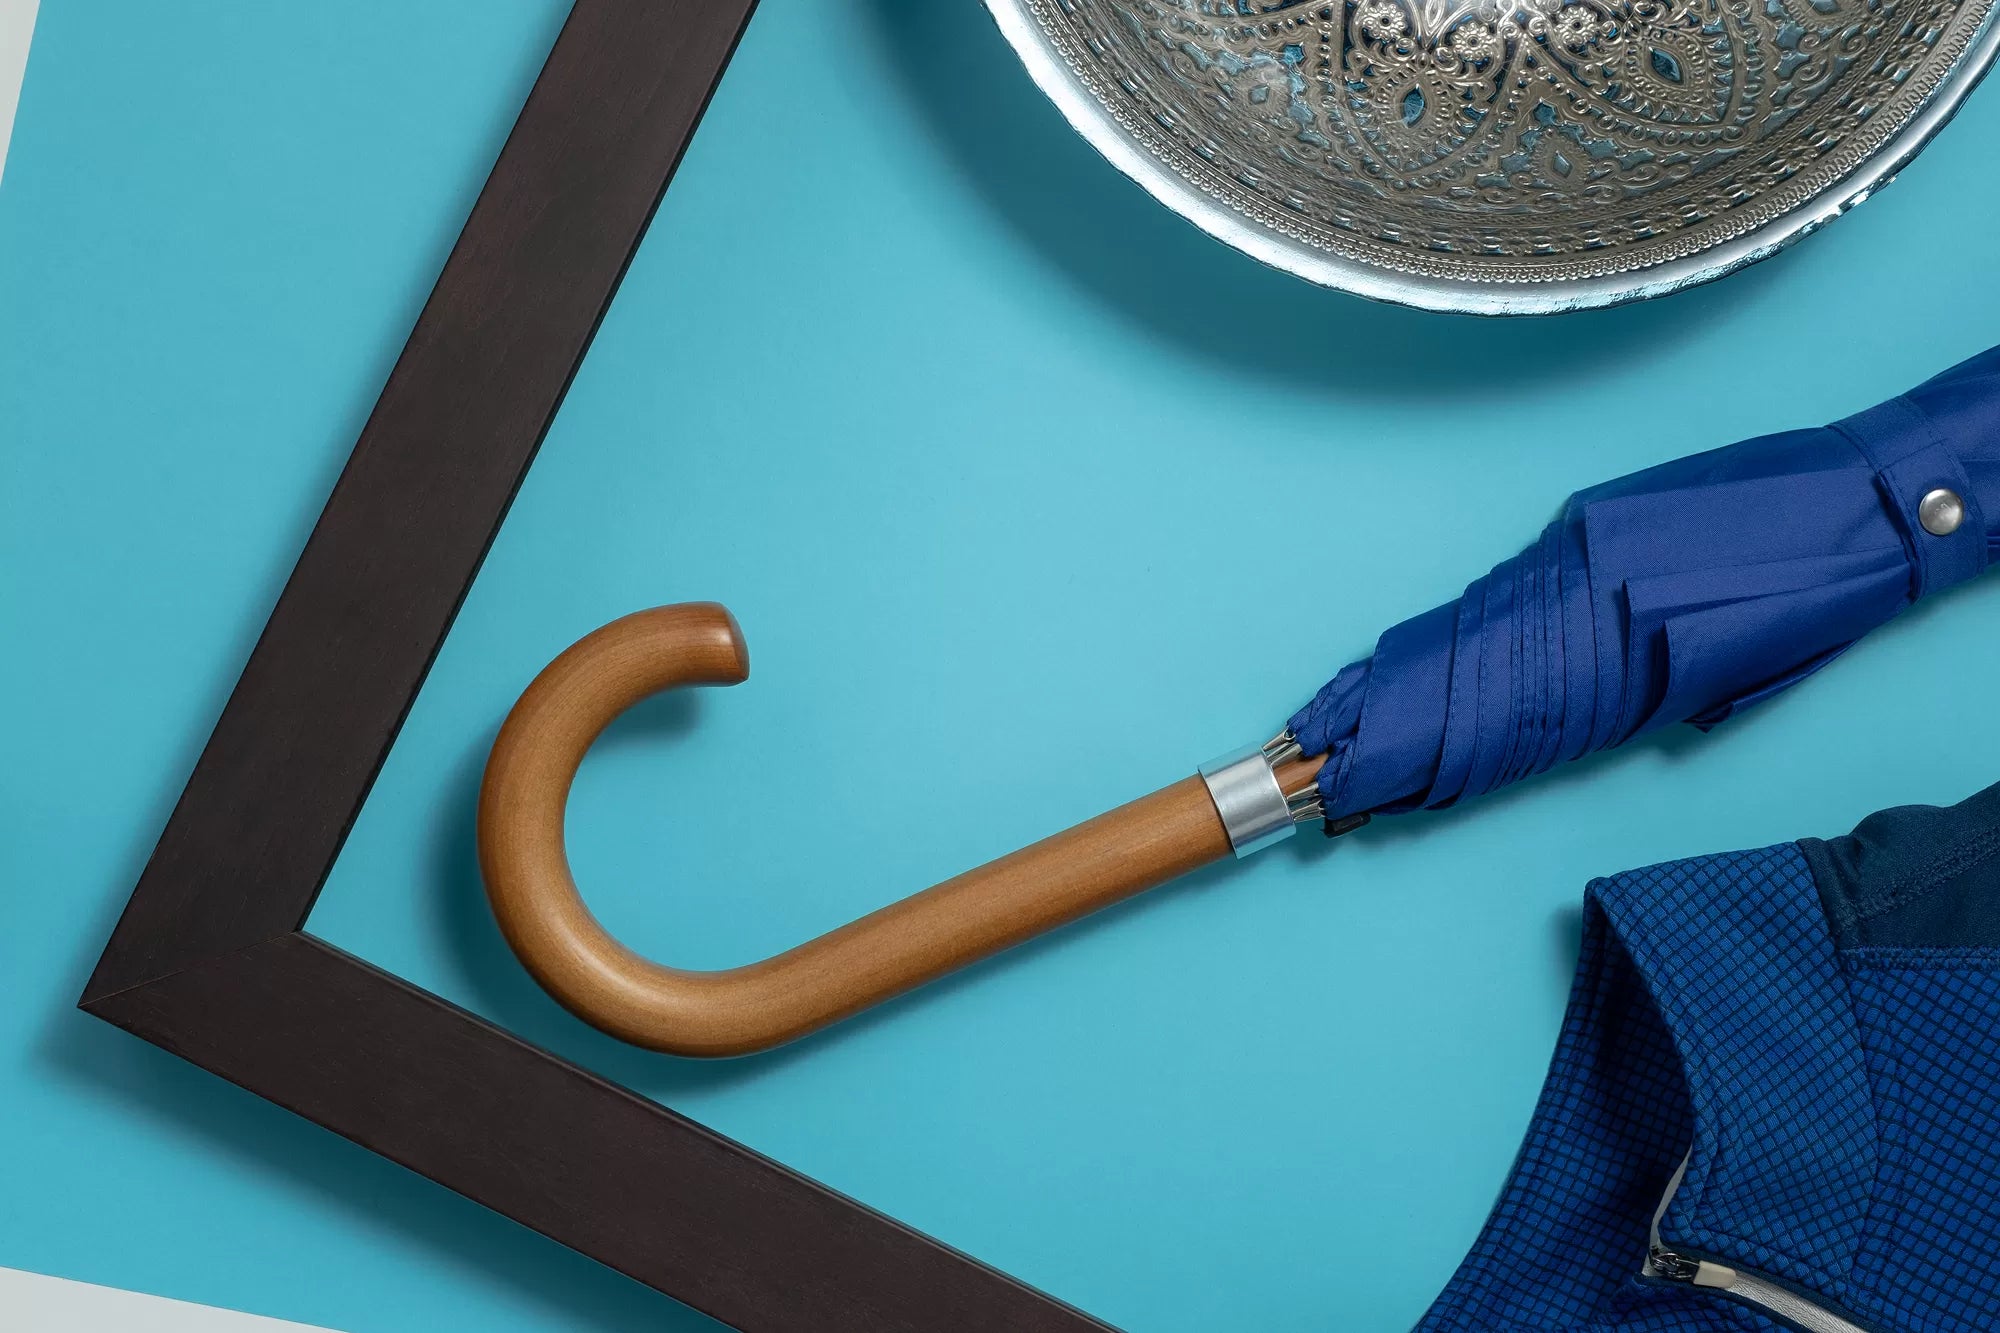 hidewise-london-umbrella-wooden-J-handle-strong-premium-quality-brolly-cobalt-blue